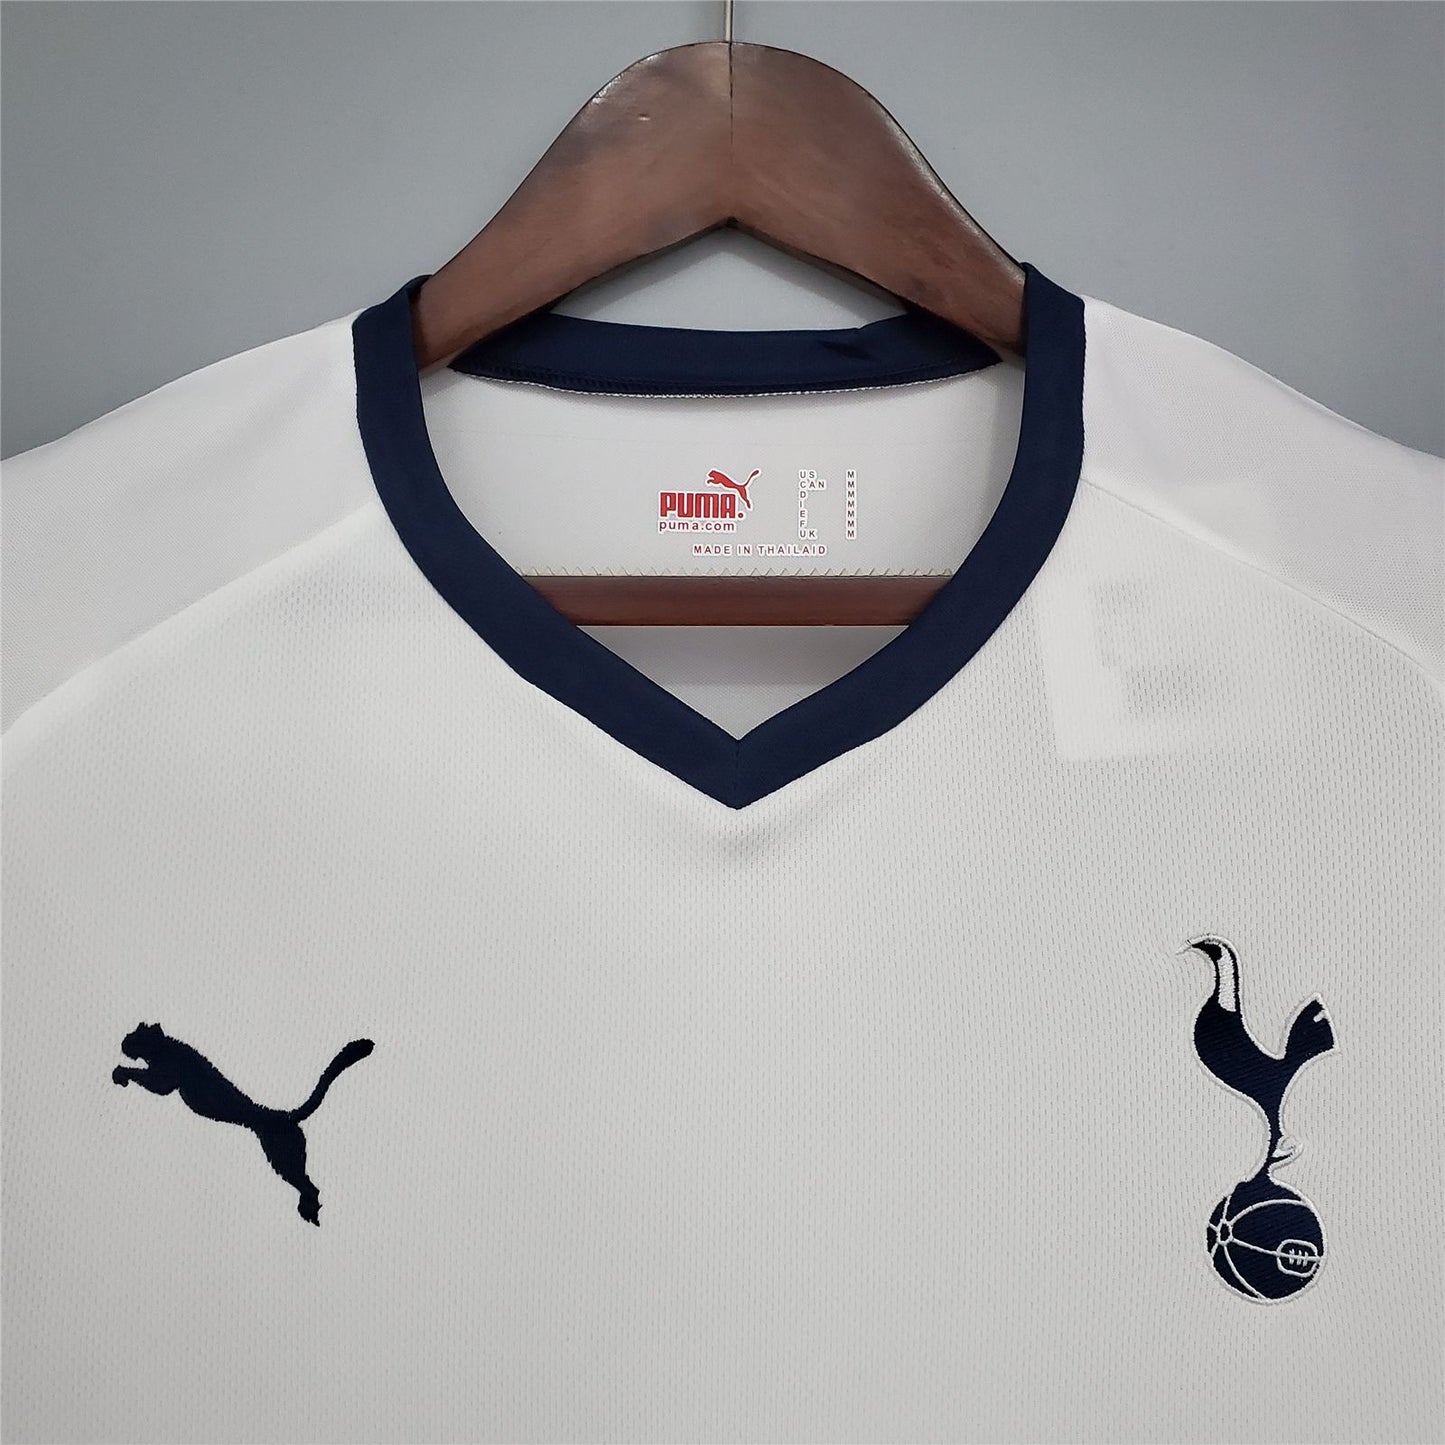 Tottenham Hotspur 08-09 Home Shirt